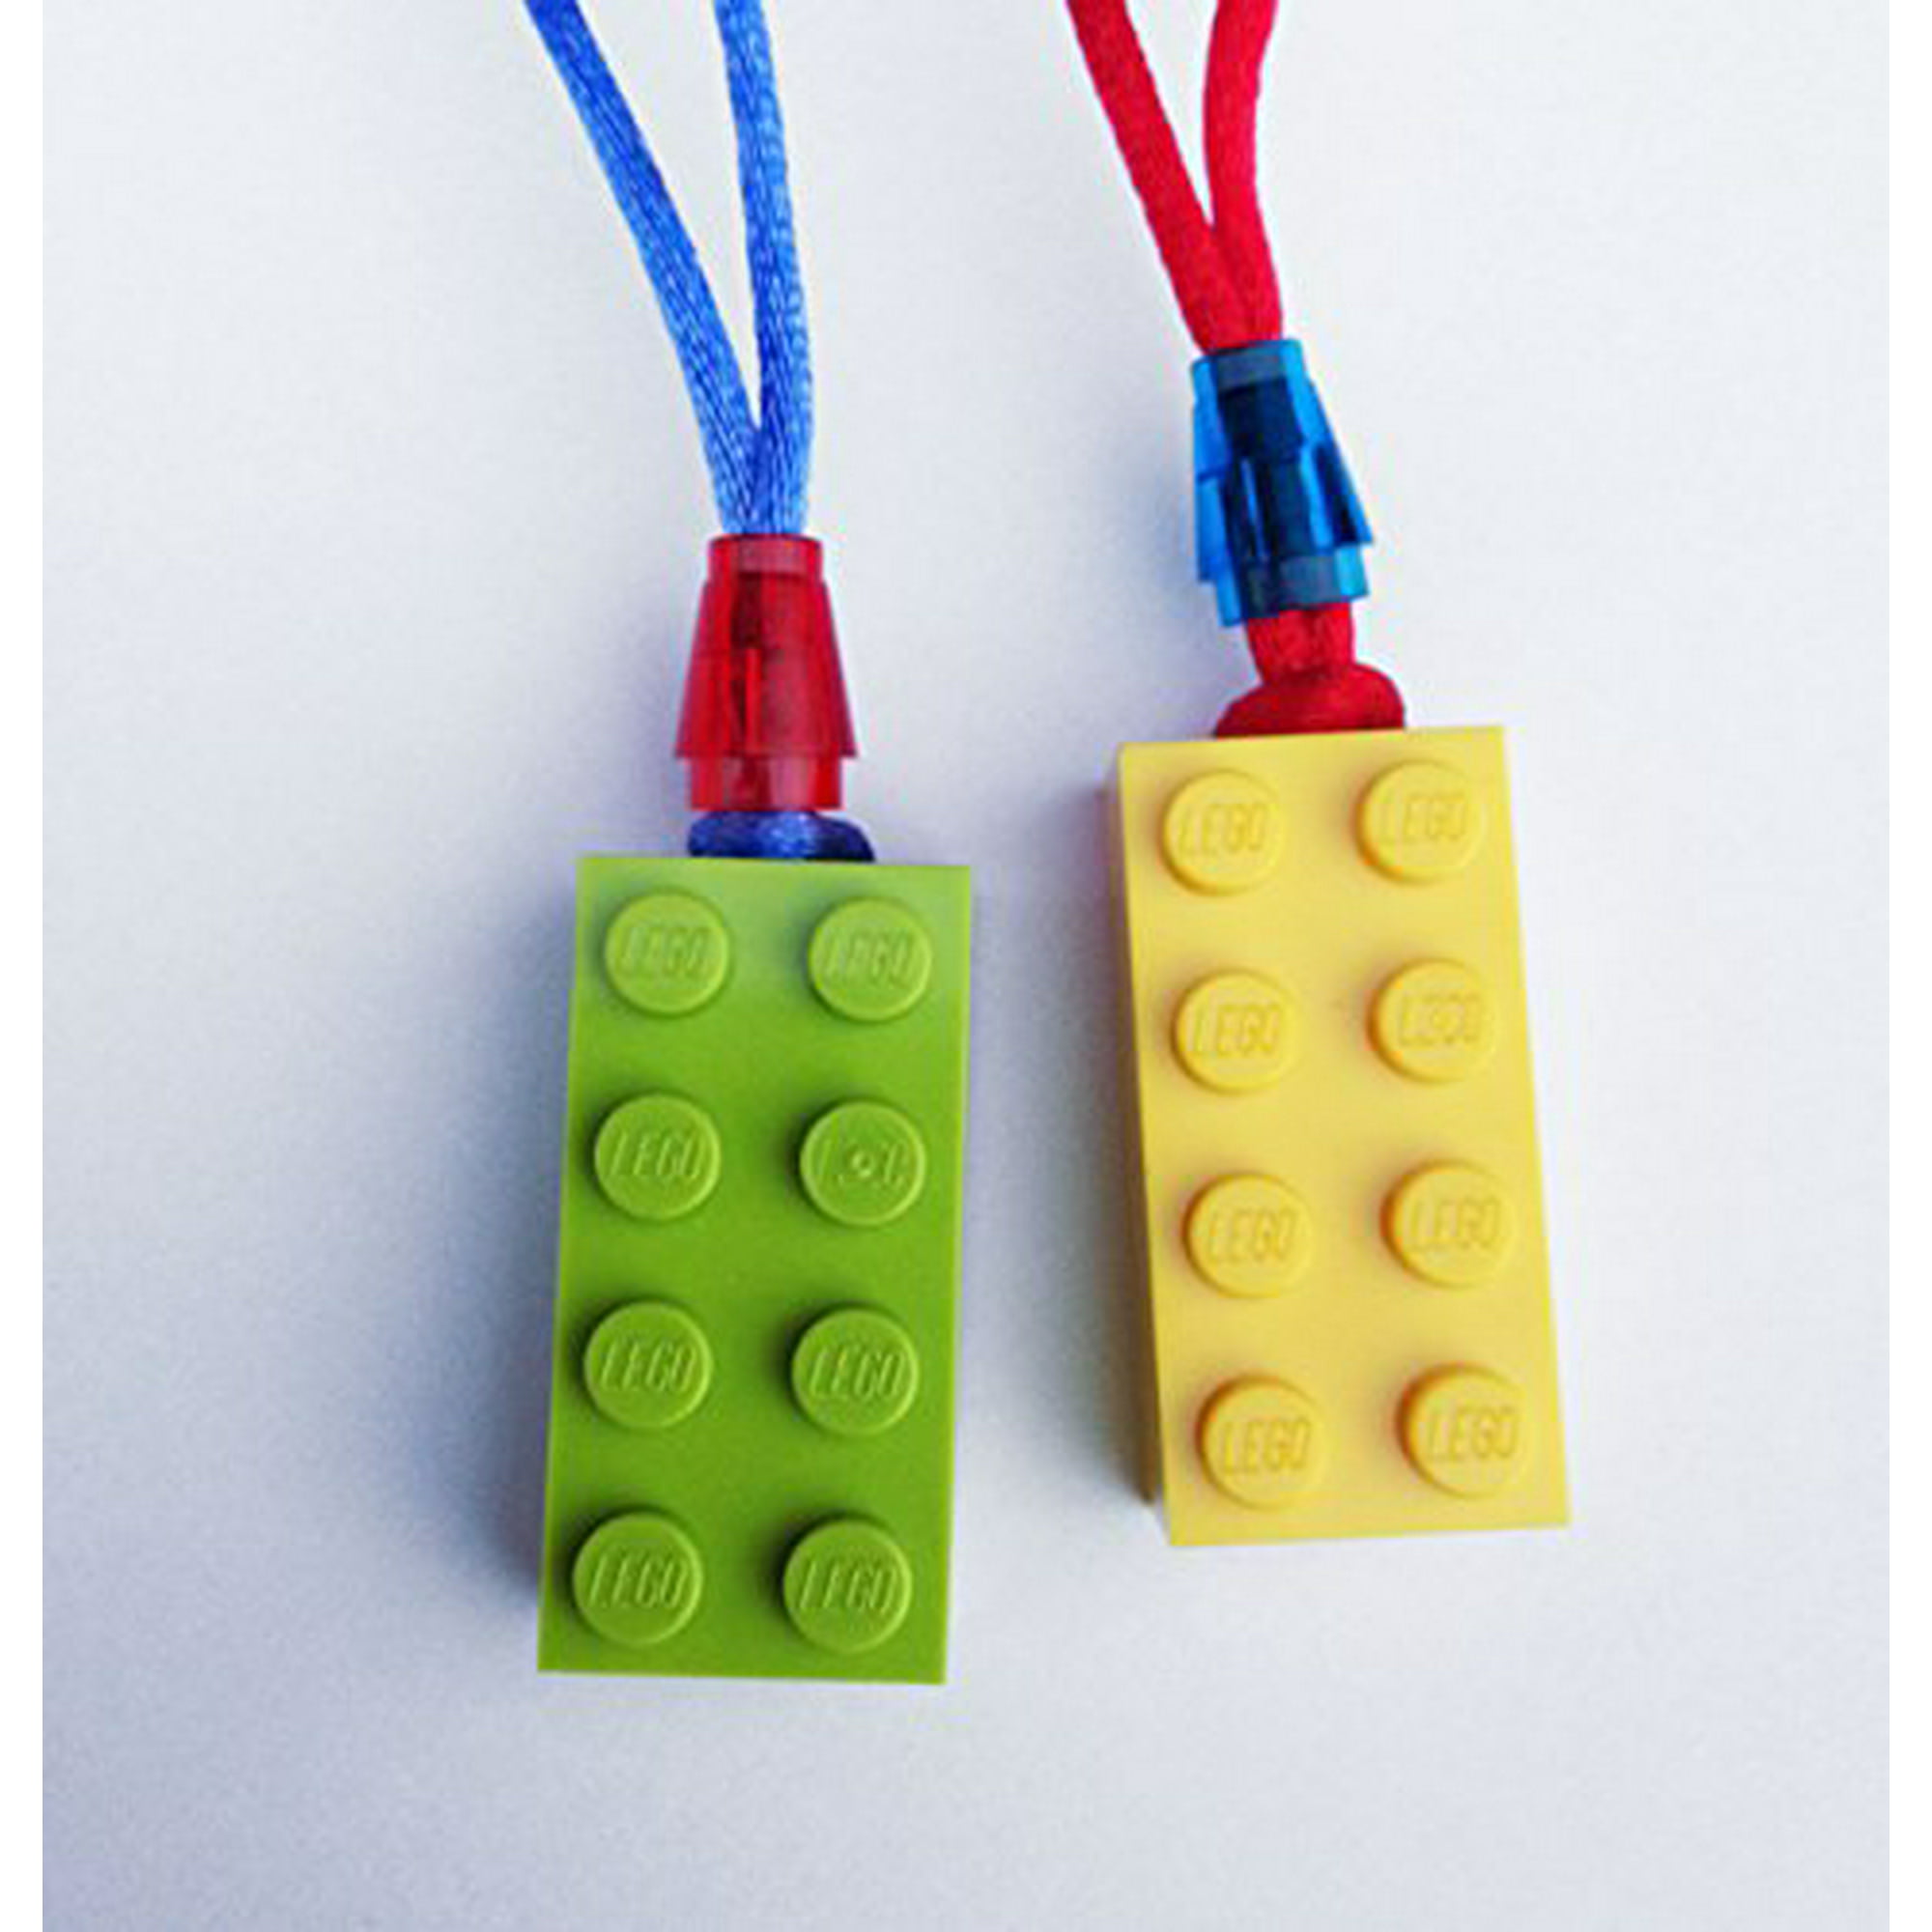 Alboroto Diariamente Reorganizar LEGO Yellow Creative Bucket 10662 | Walmart Canada